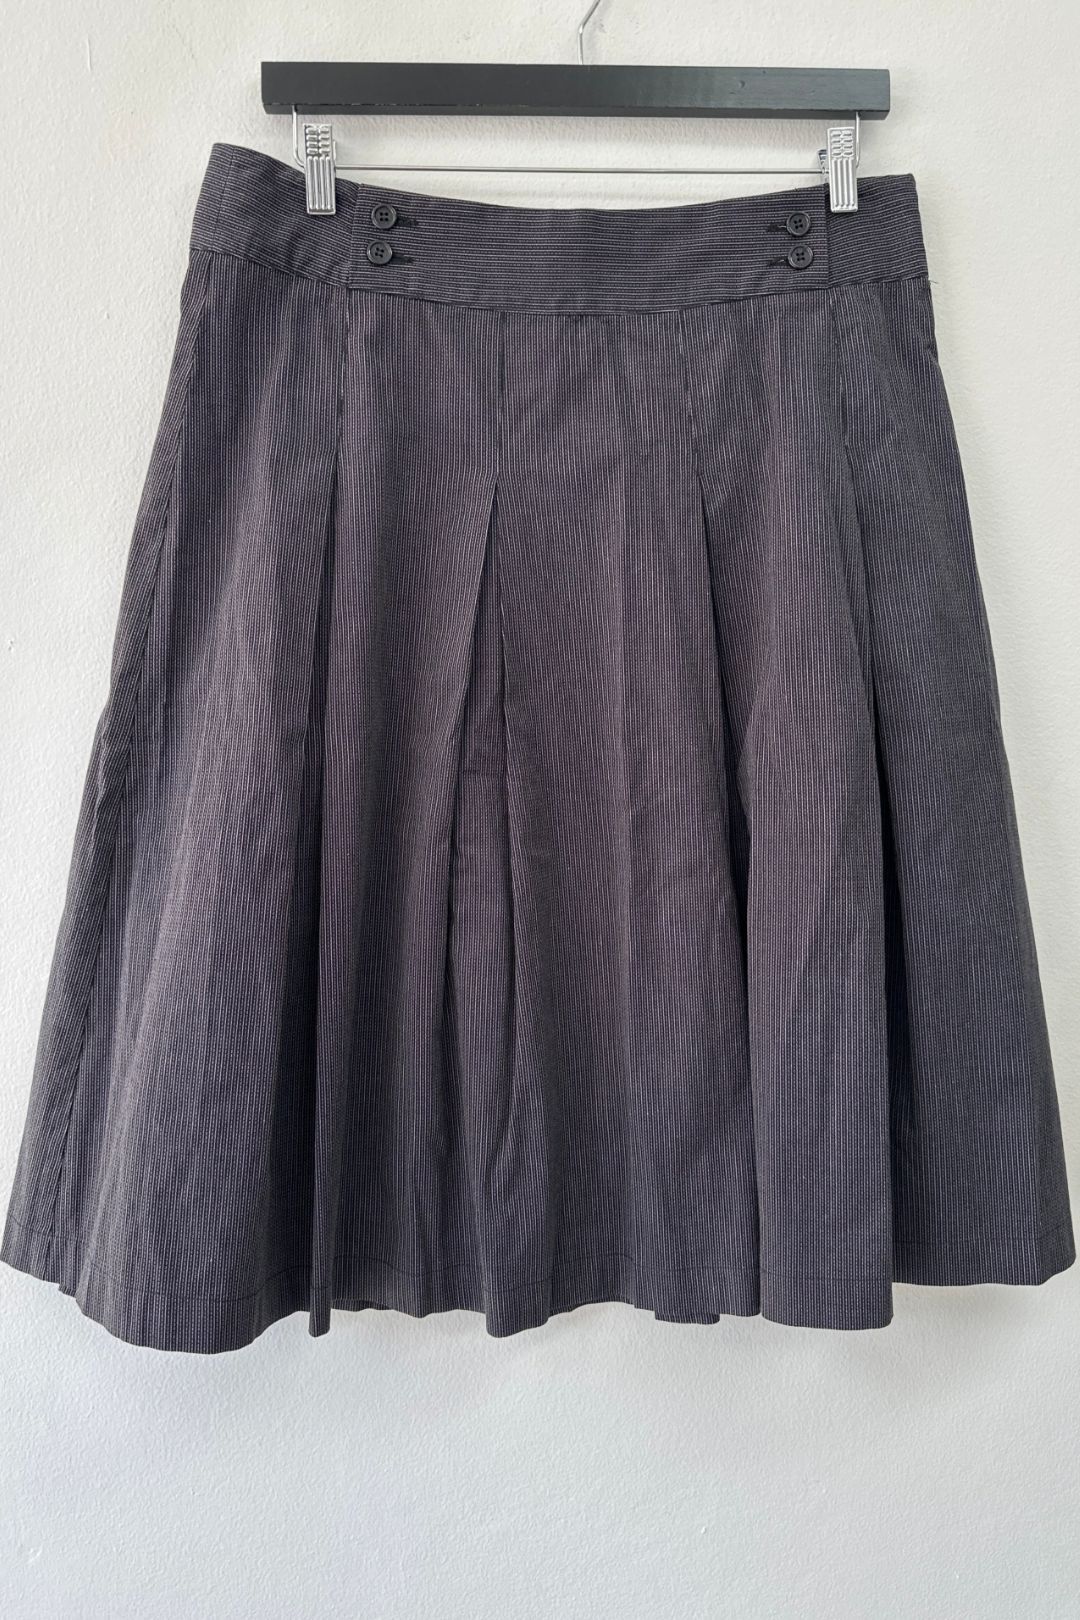 Laura Ashley - Grey Pin Striped Pleated Skirt